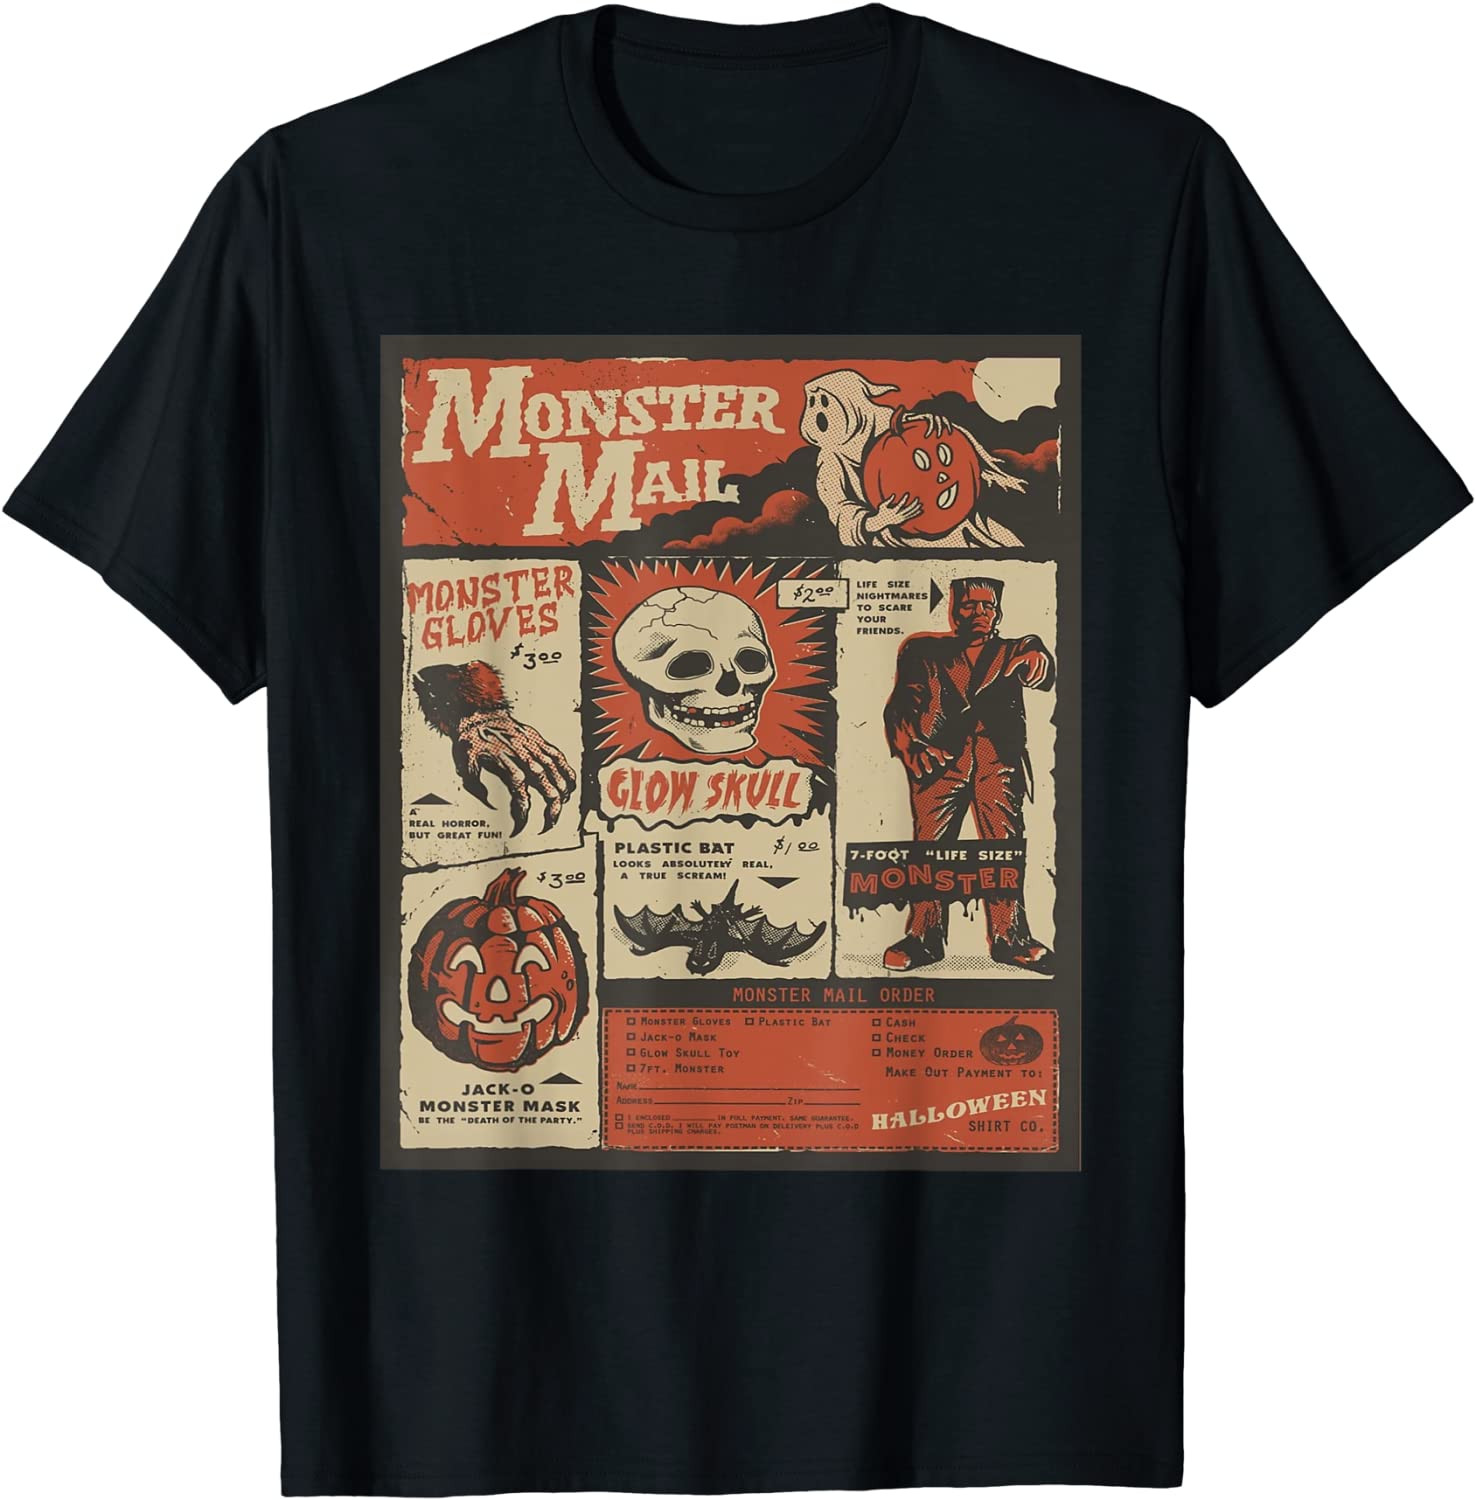 Vintage Horror Movie Poster Horror Terror Old Time Halloween T-Shirt